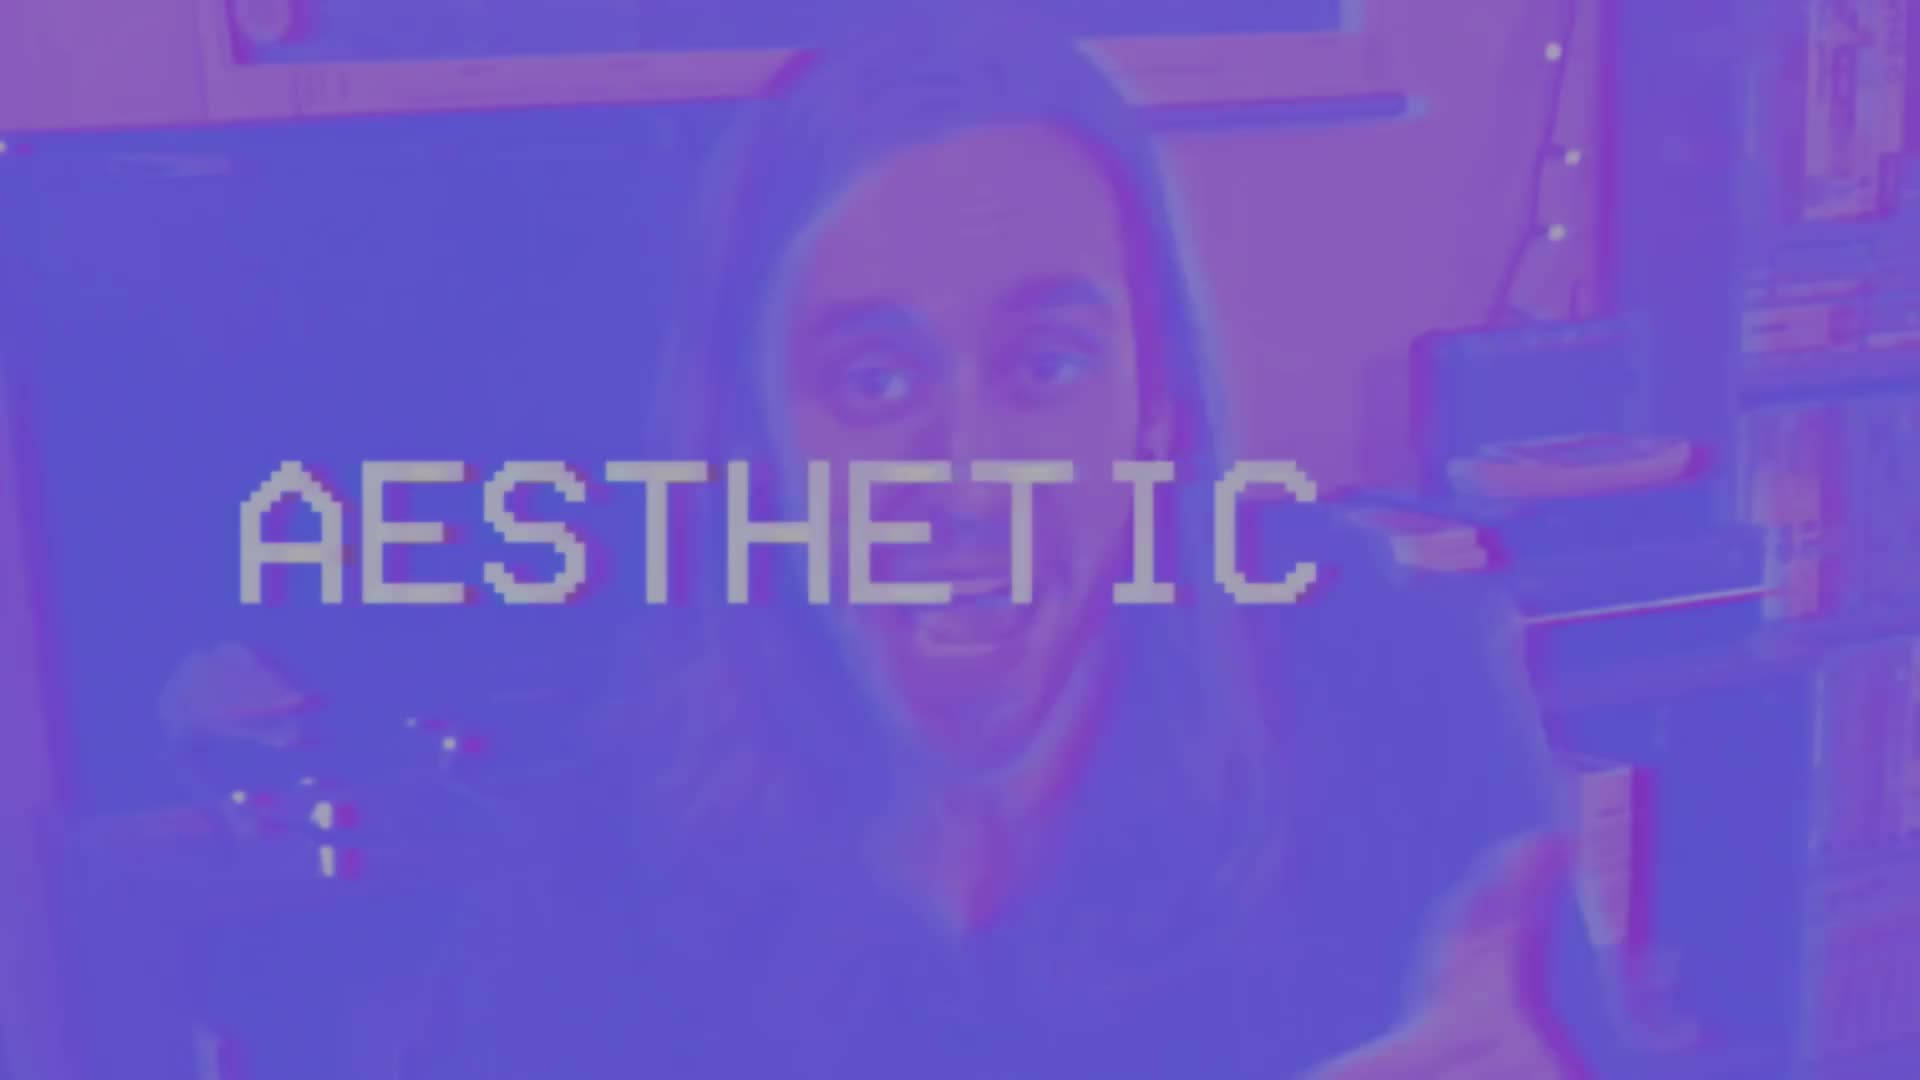 Aesthetic Retro Vhs Video Background